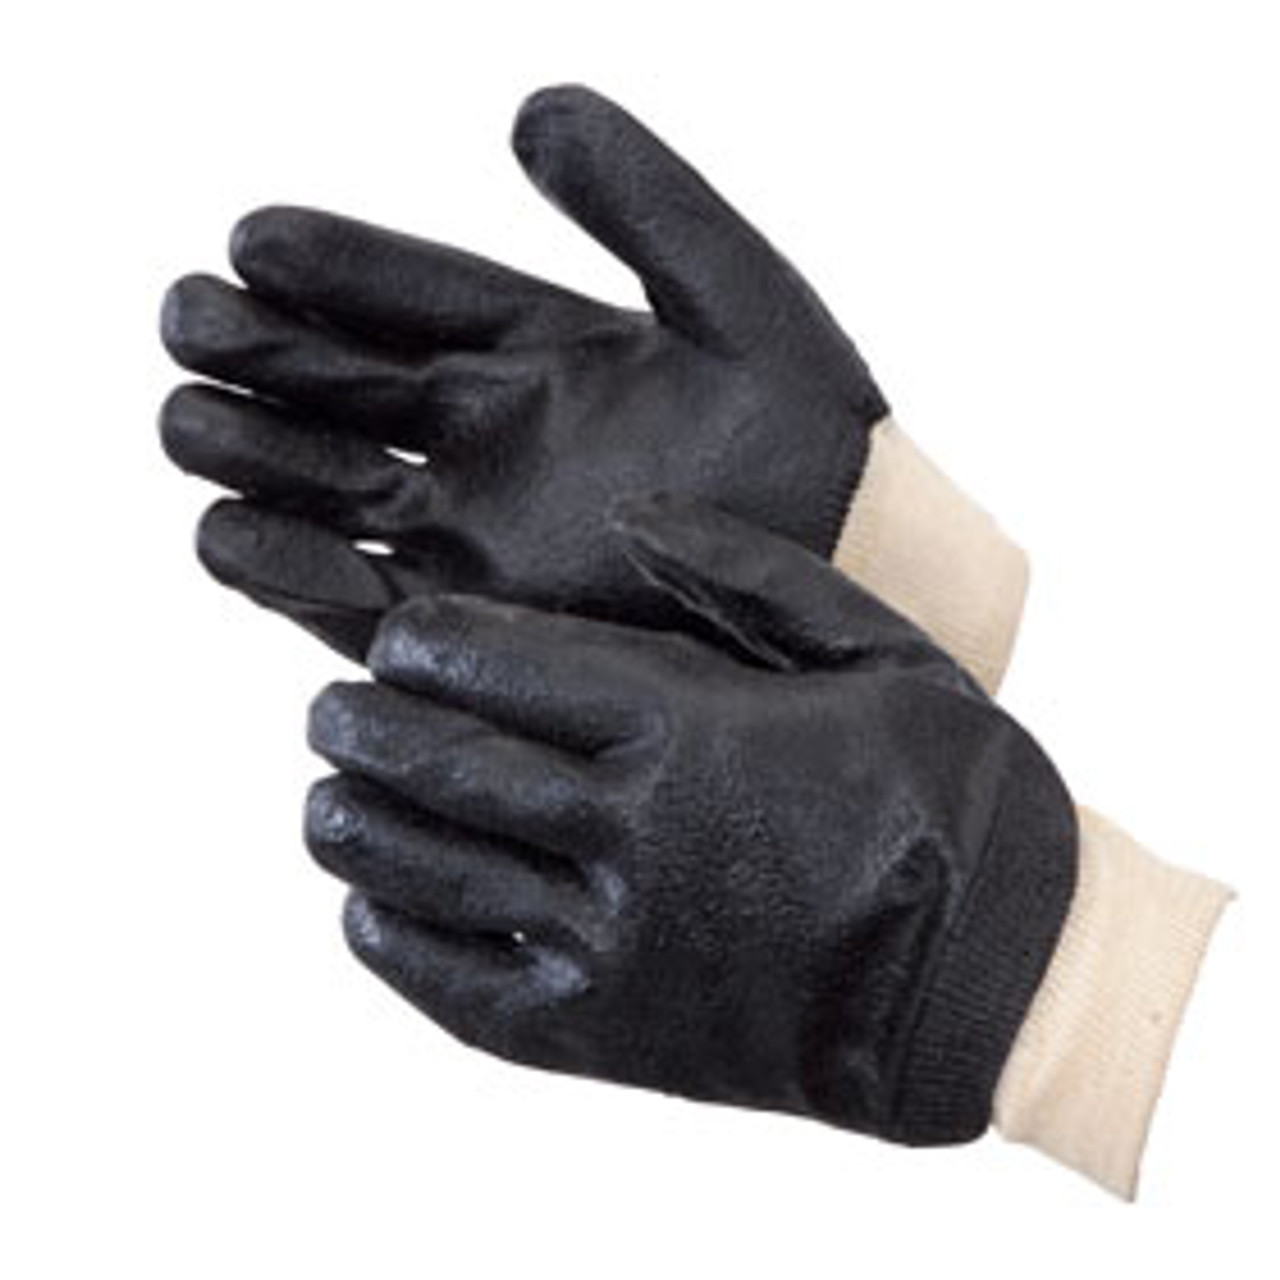 PVC Semi-Rough Finish Gloves w/Knit Wrist